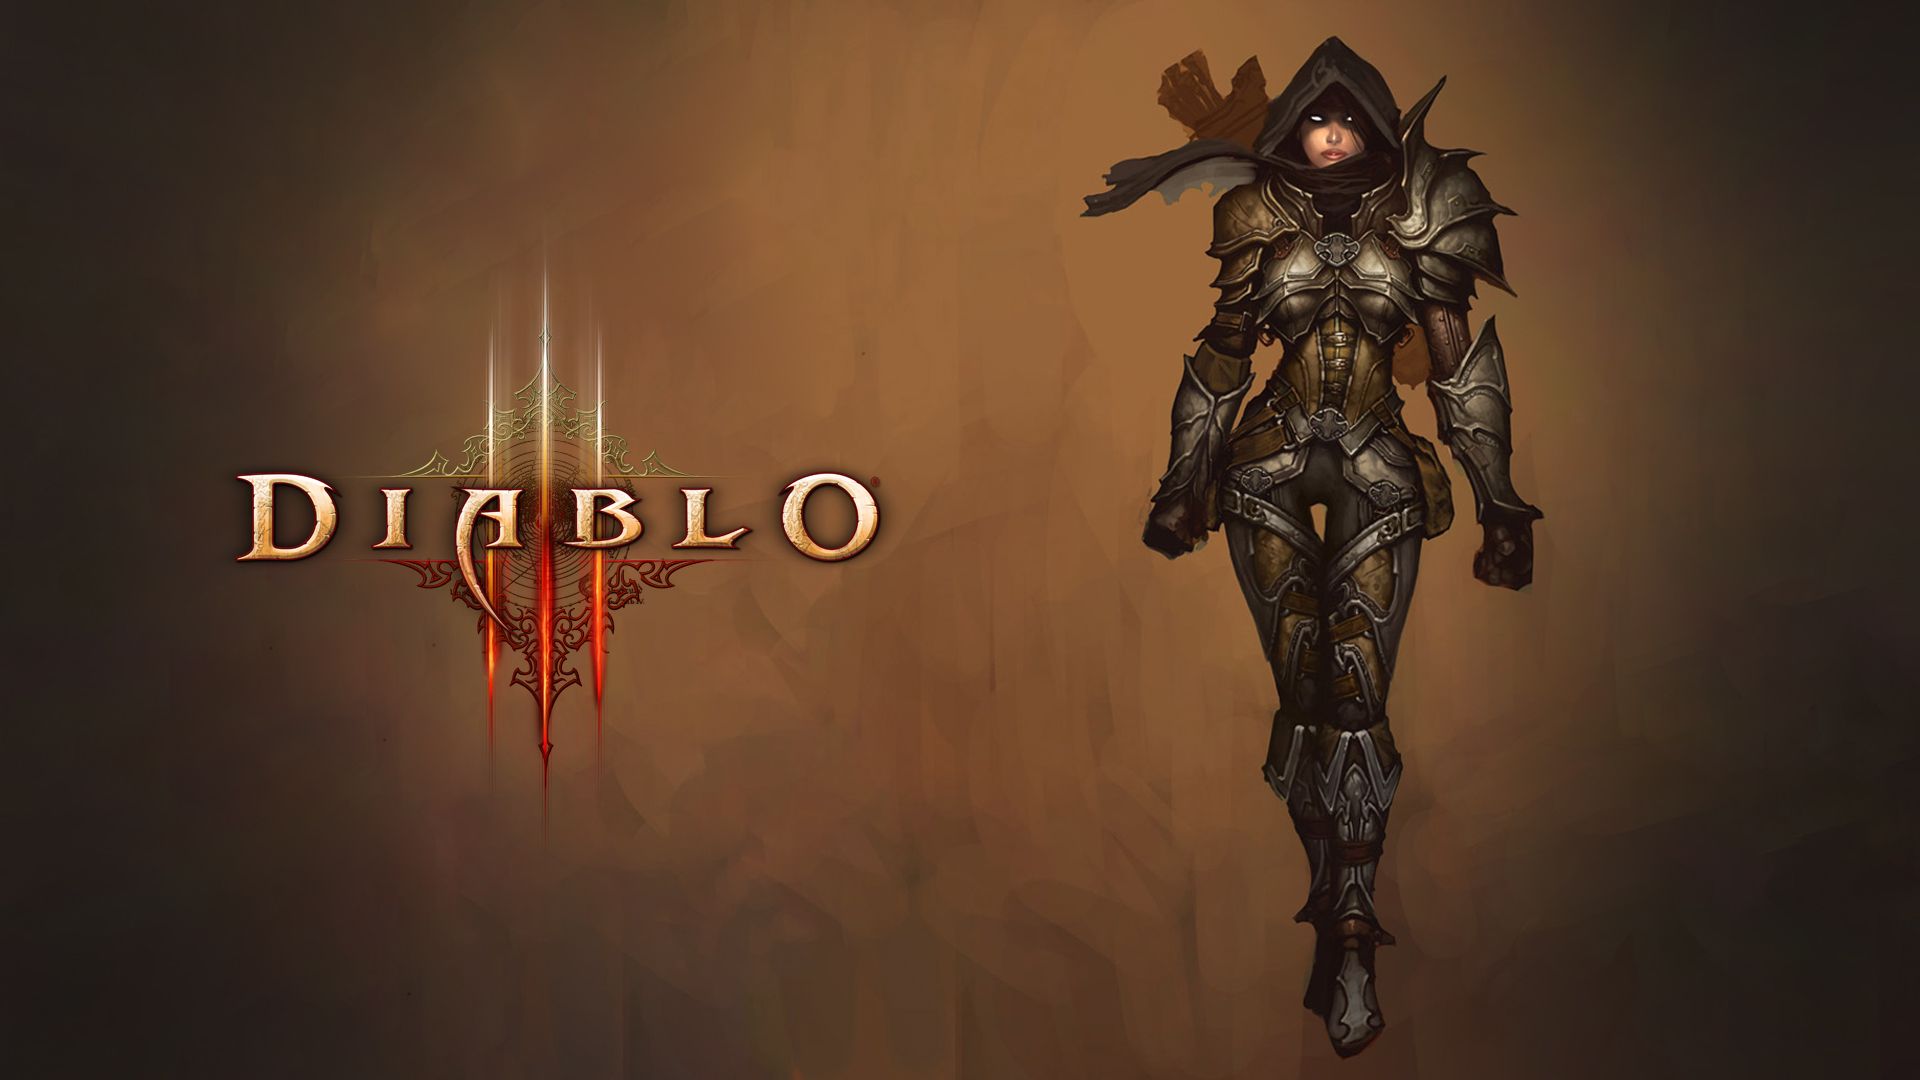  Diablo 3 1920x1080 Hintergrundbild 1920x1080. video game characters, Diablo 3: Reaper of Souls, video game art, illustration, typography, Demon Hunter (Diablo)x1080 Wallpaper